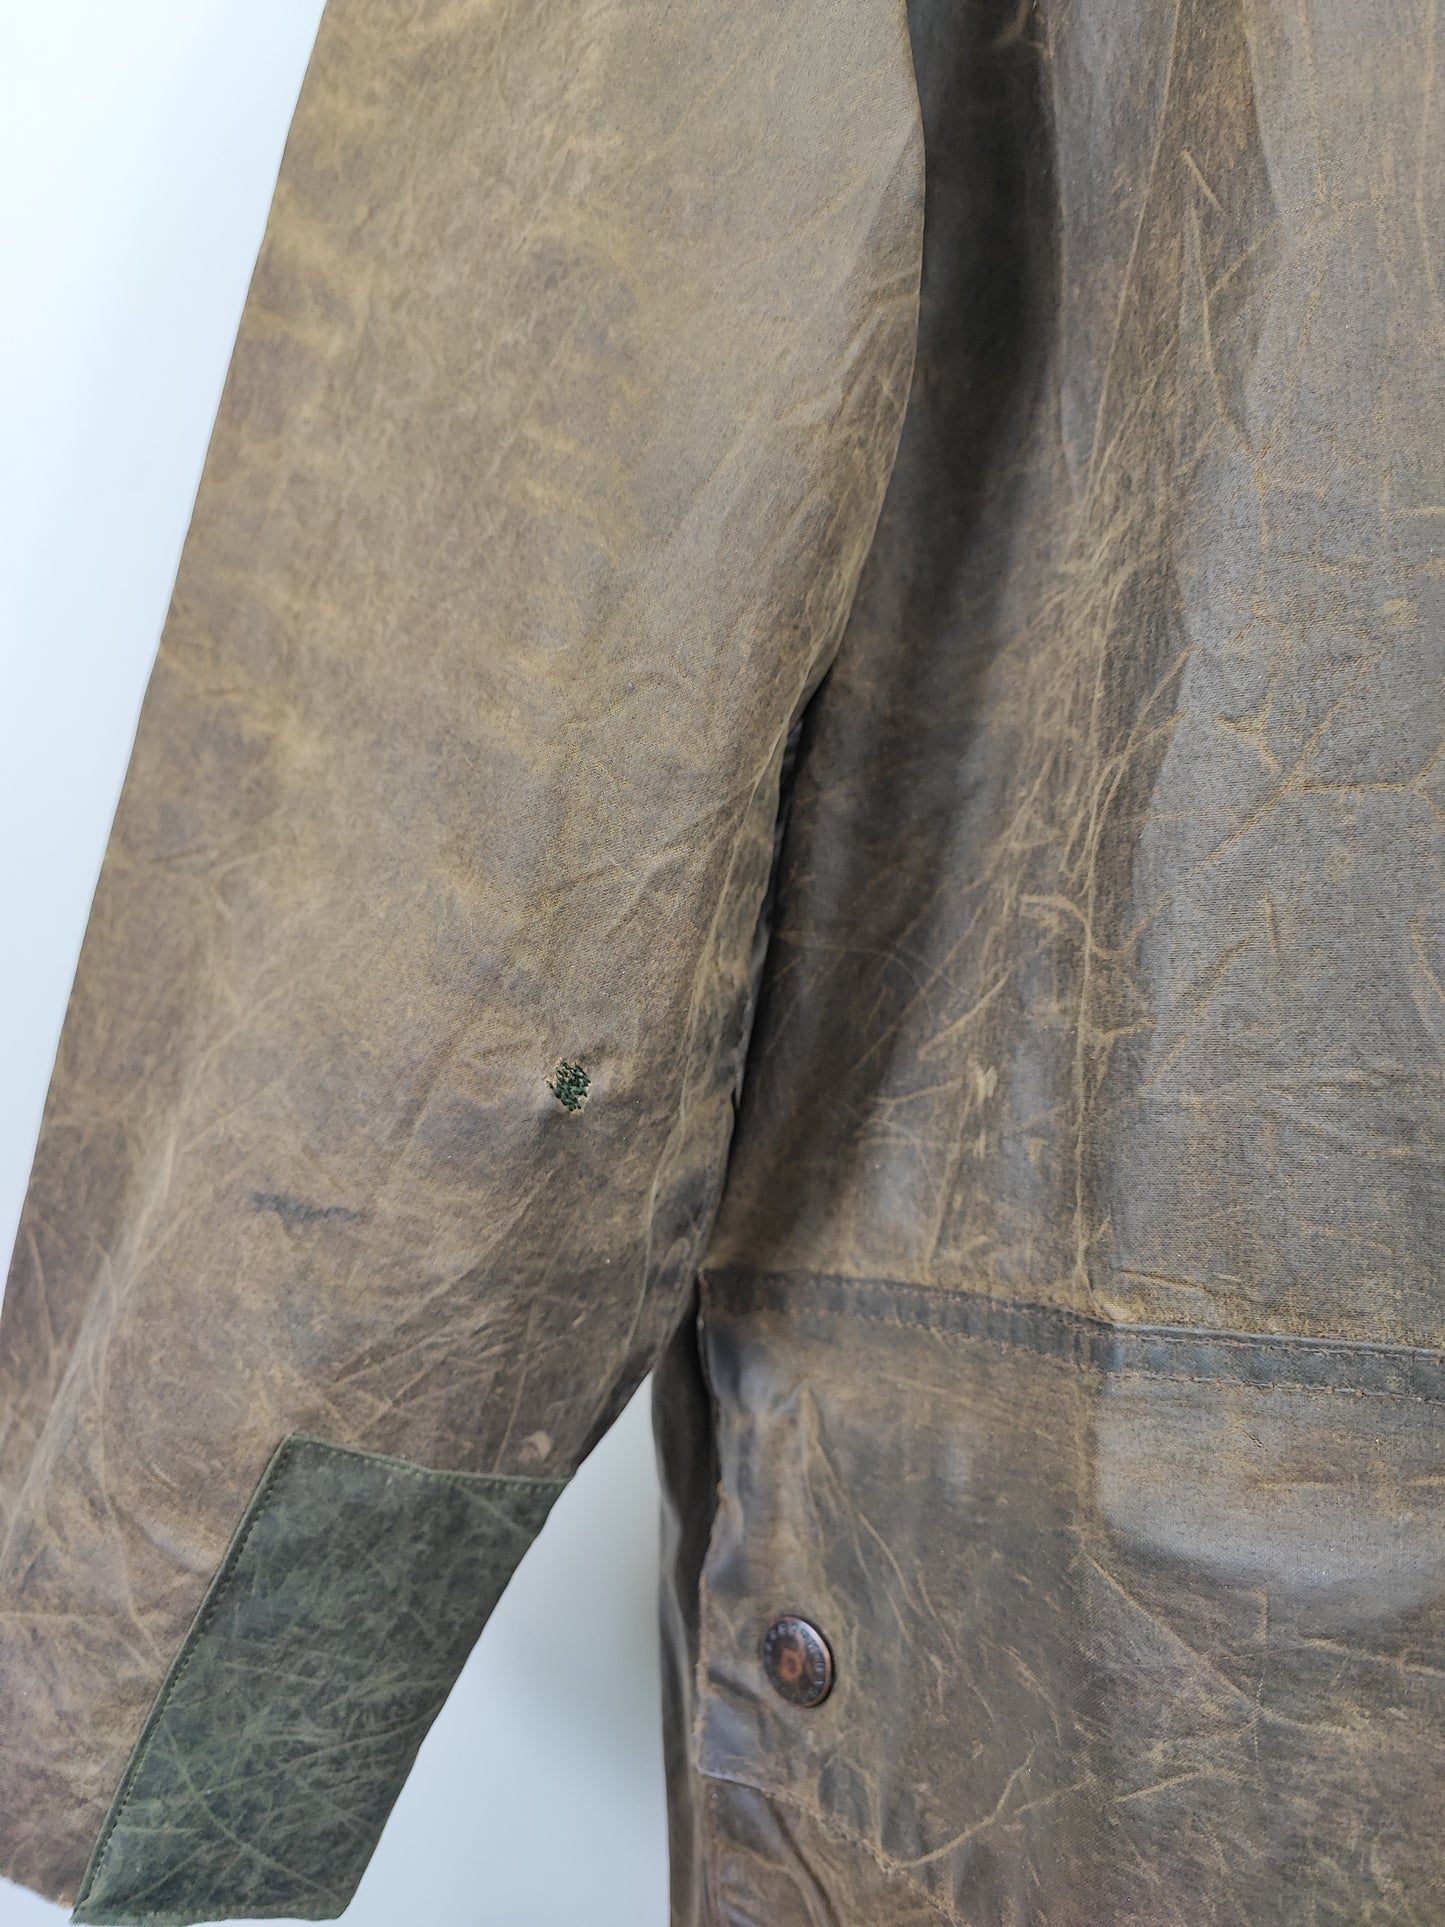 RARO Barbour Solway Zipper Cerato C42/107 cm Large-2 crests Solway Zipper waxed Jacket Large